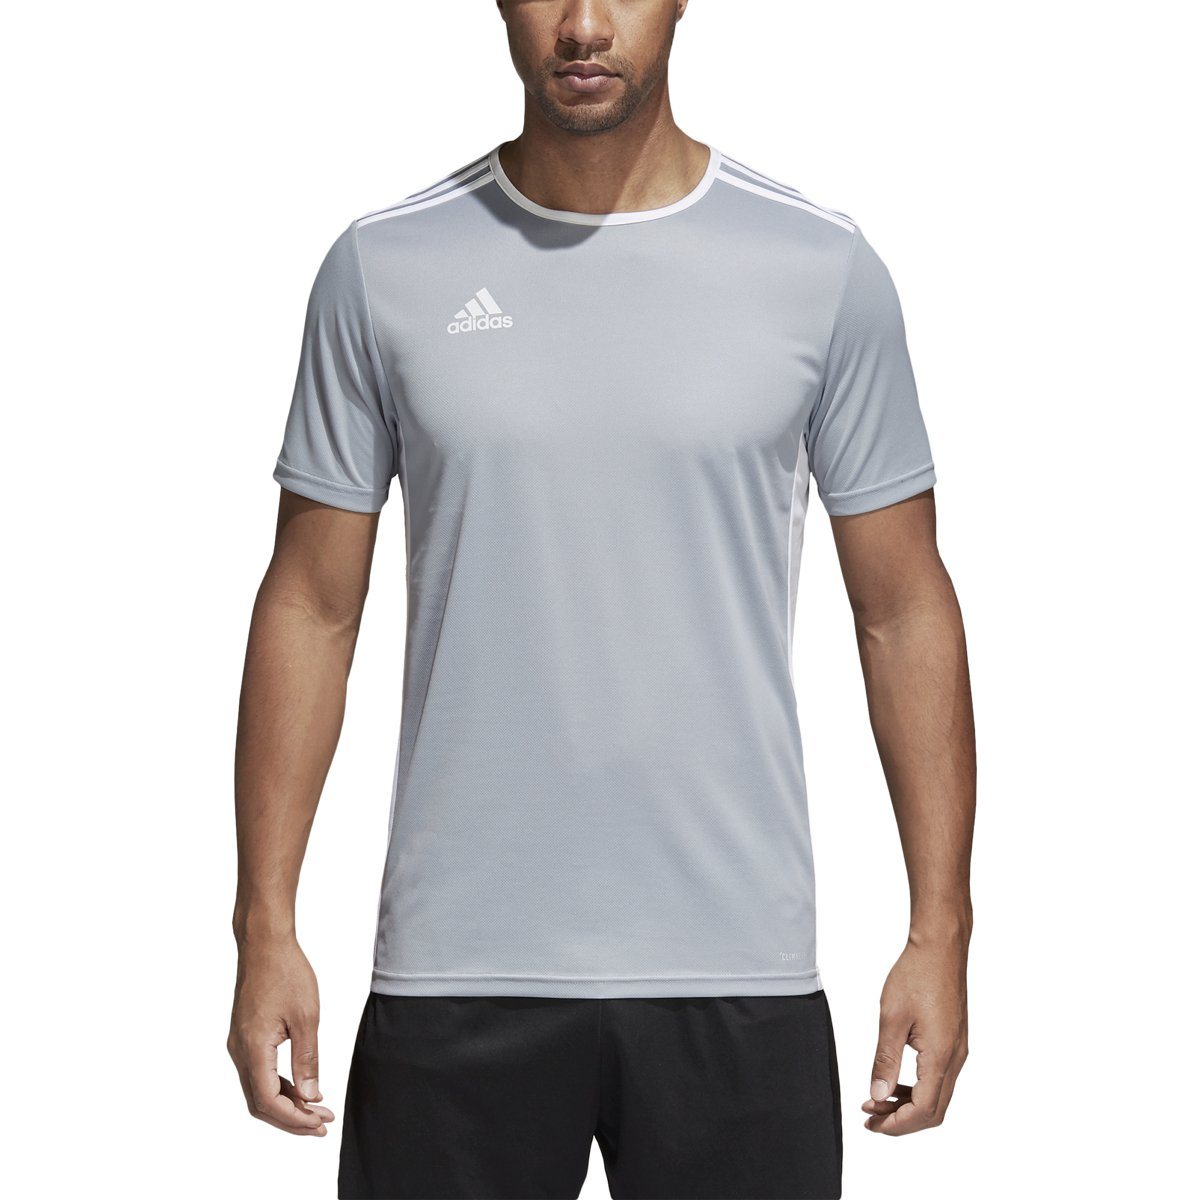 adidas Men's Entrada 18 Jersey | CD8382 Soccer Apparel adidas Adult X-Small light grey/white 